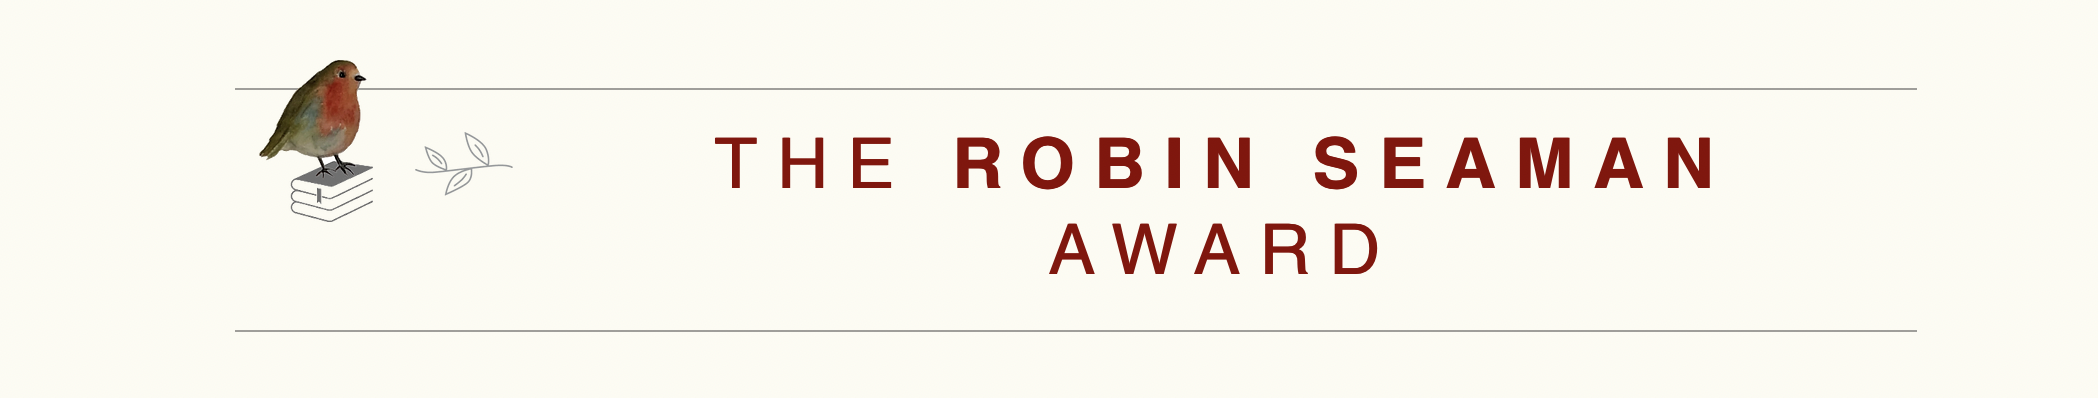 The Robin Seaman award, by Bay Area Women in Publishing